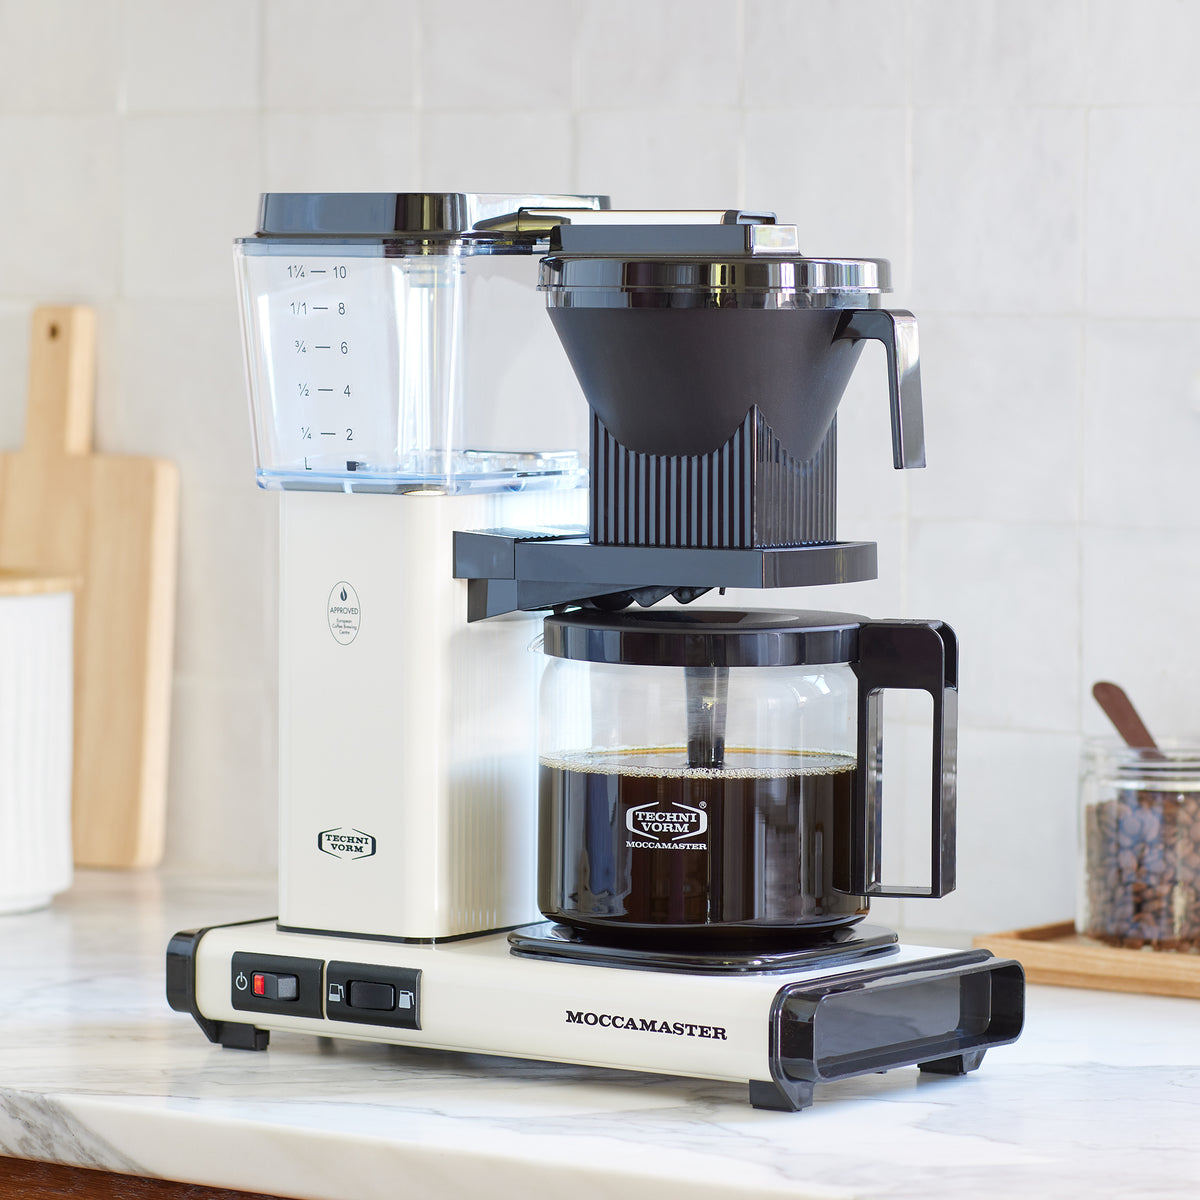 Select KBGV Coffee Moccamaster Maker Automatic Machine: Coffee - USA Moccamaster